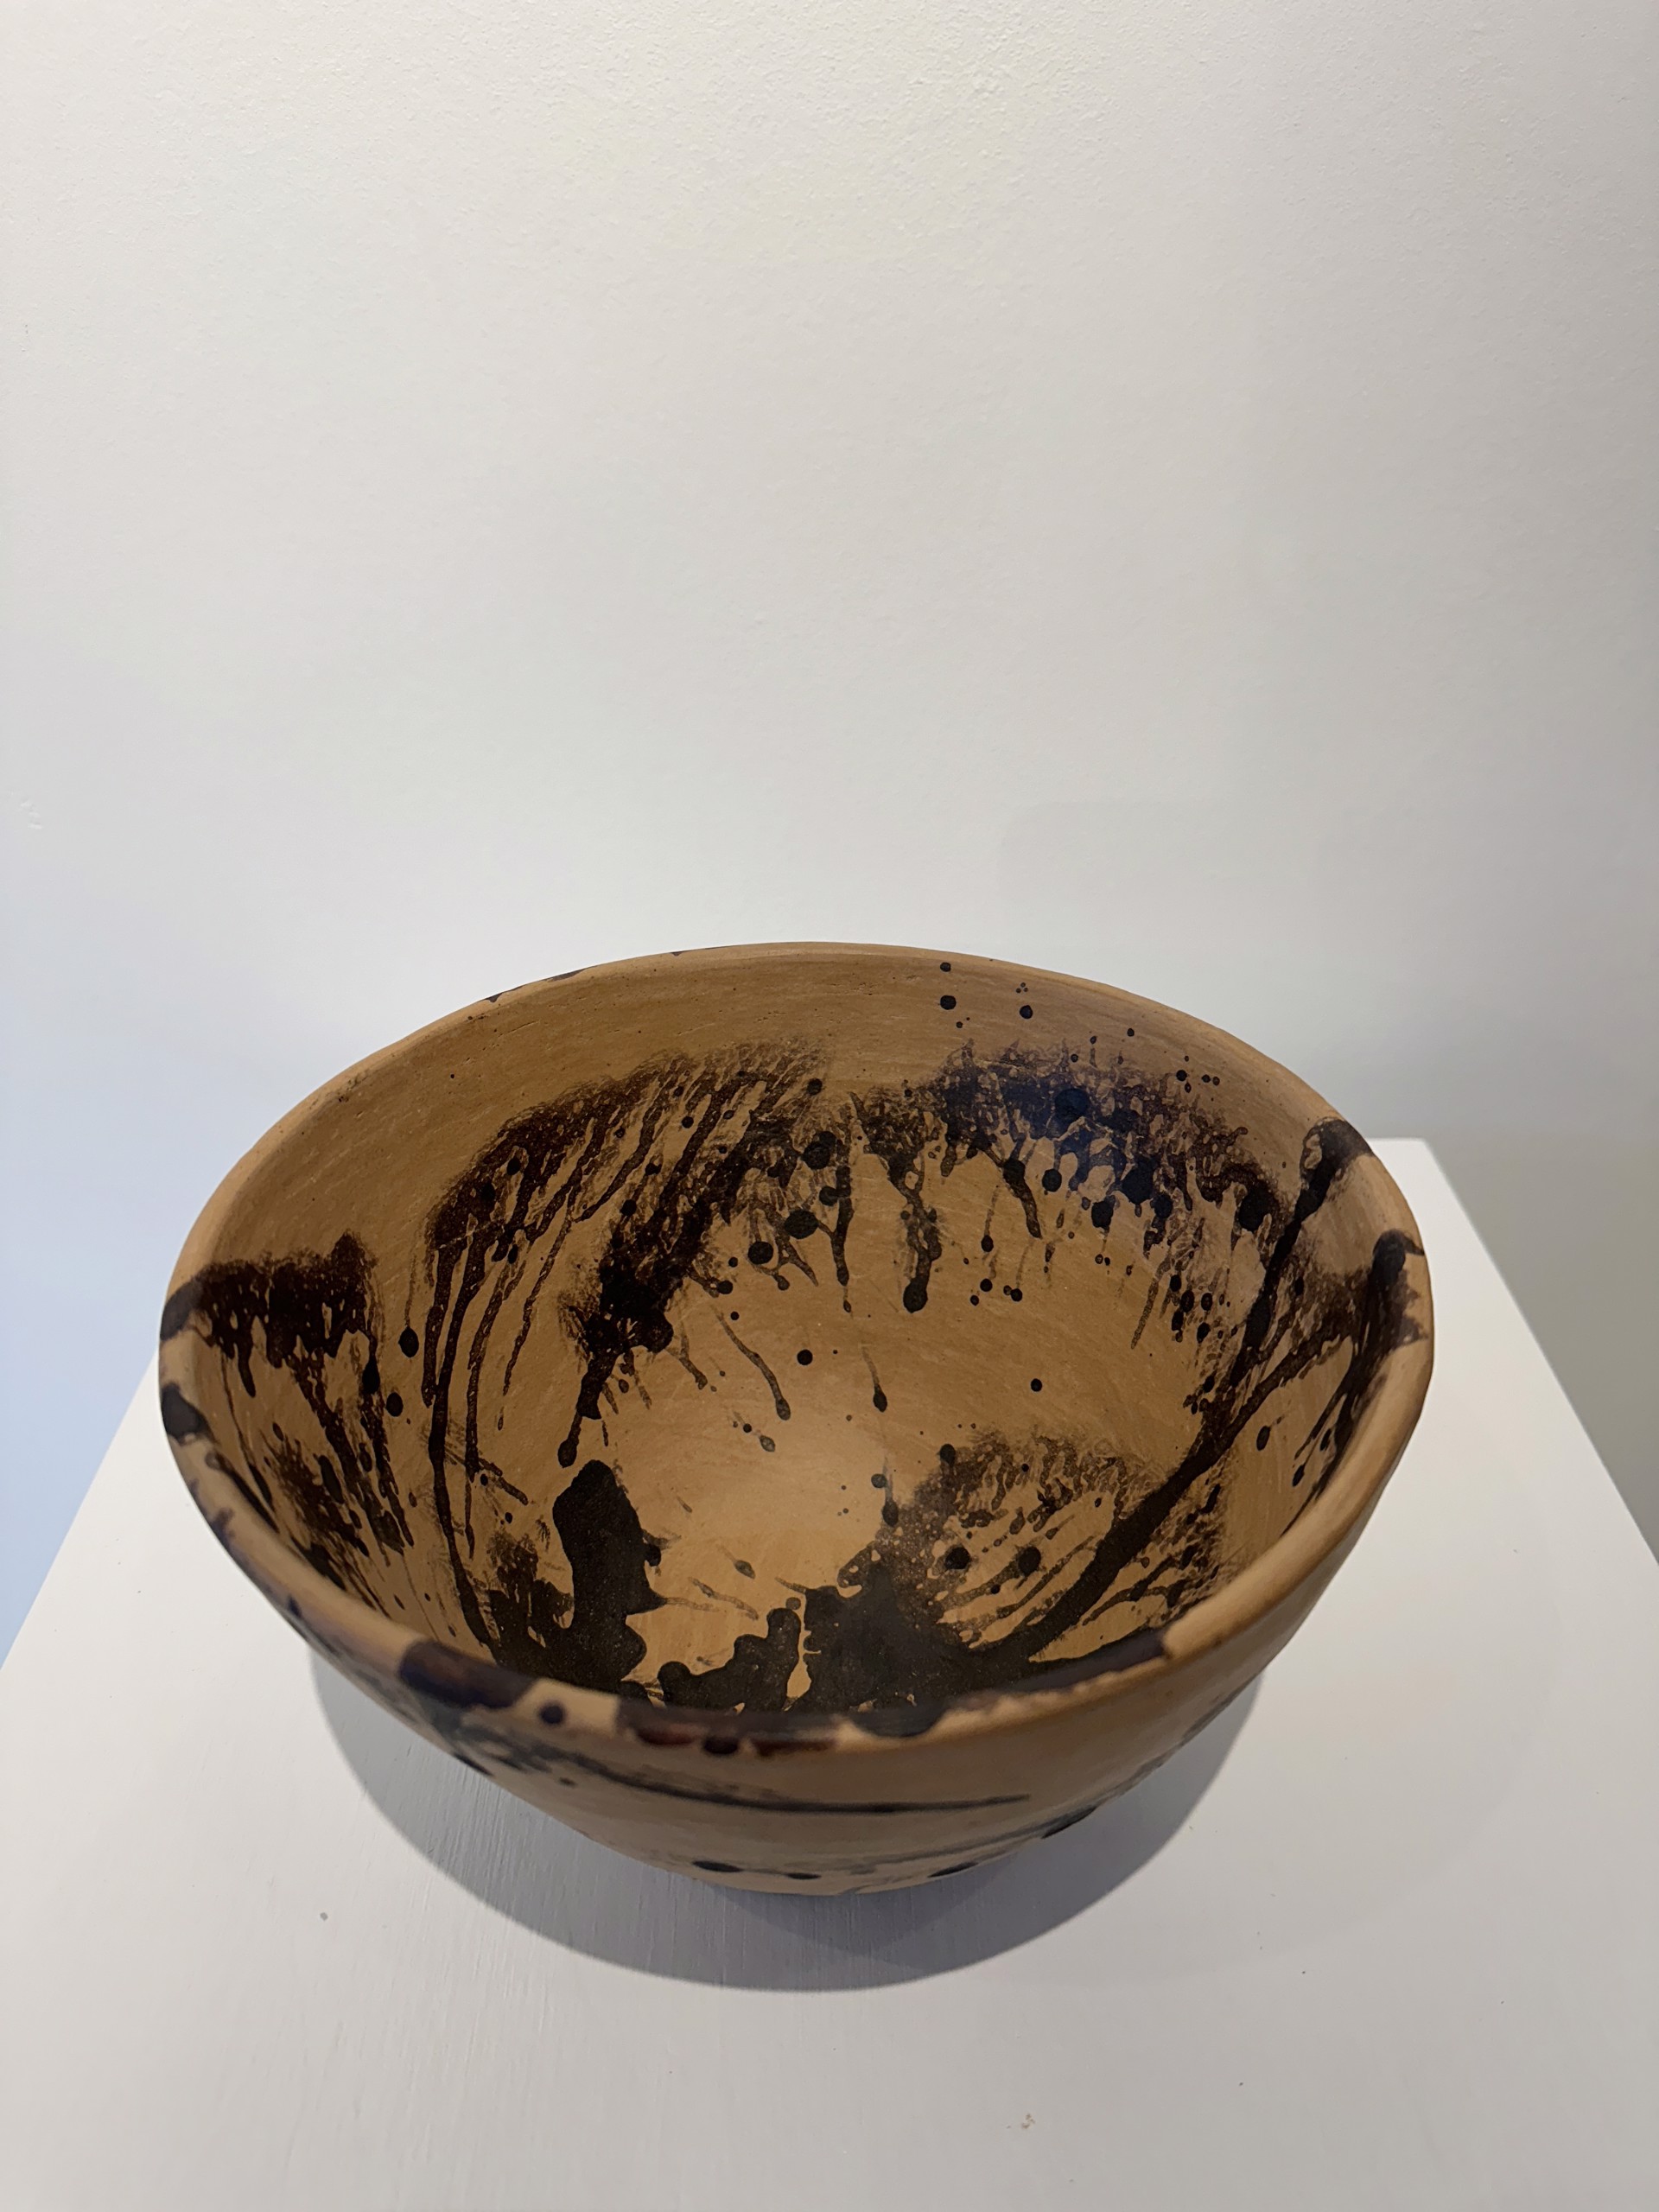 Medium Bowl by Colectivo 1050